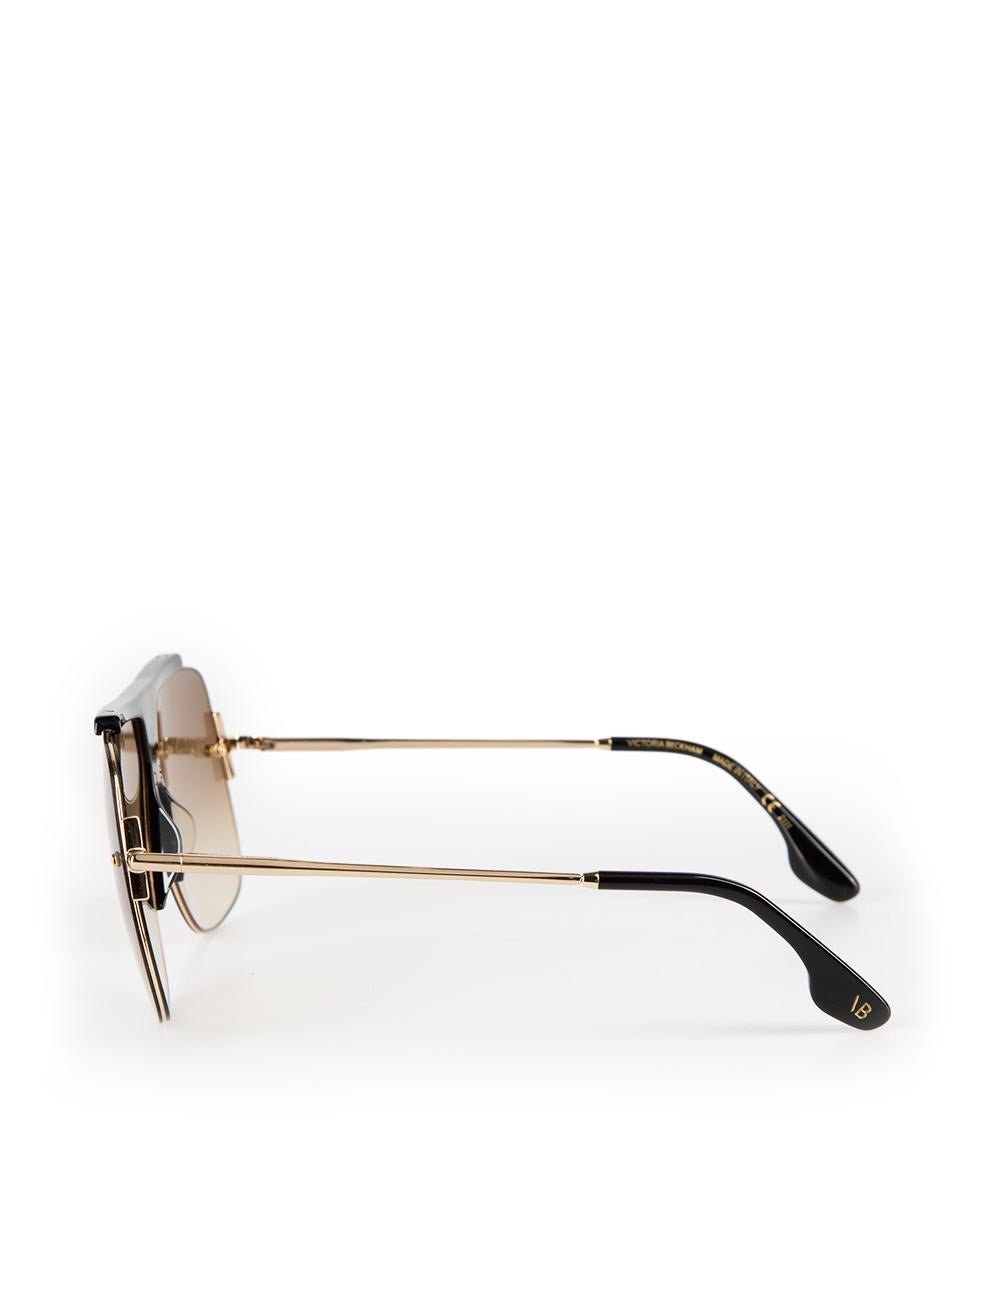 Victoria Beckham Brown Gradient Navigator Sunglasses For Sale 1